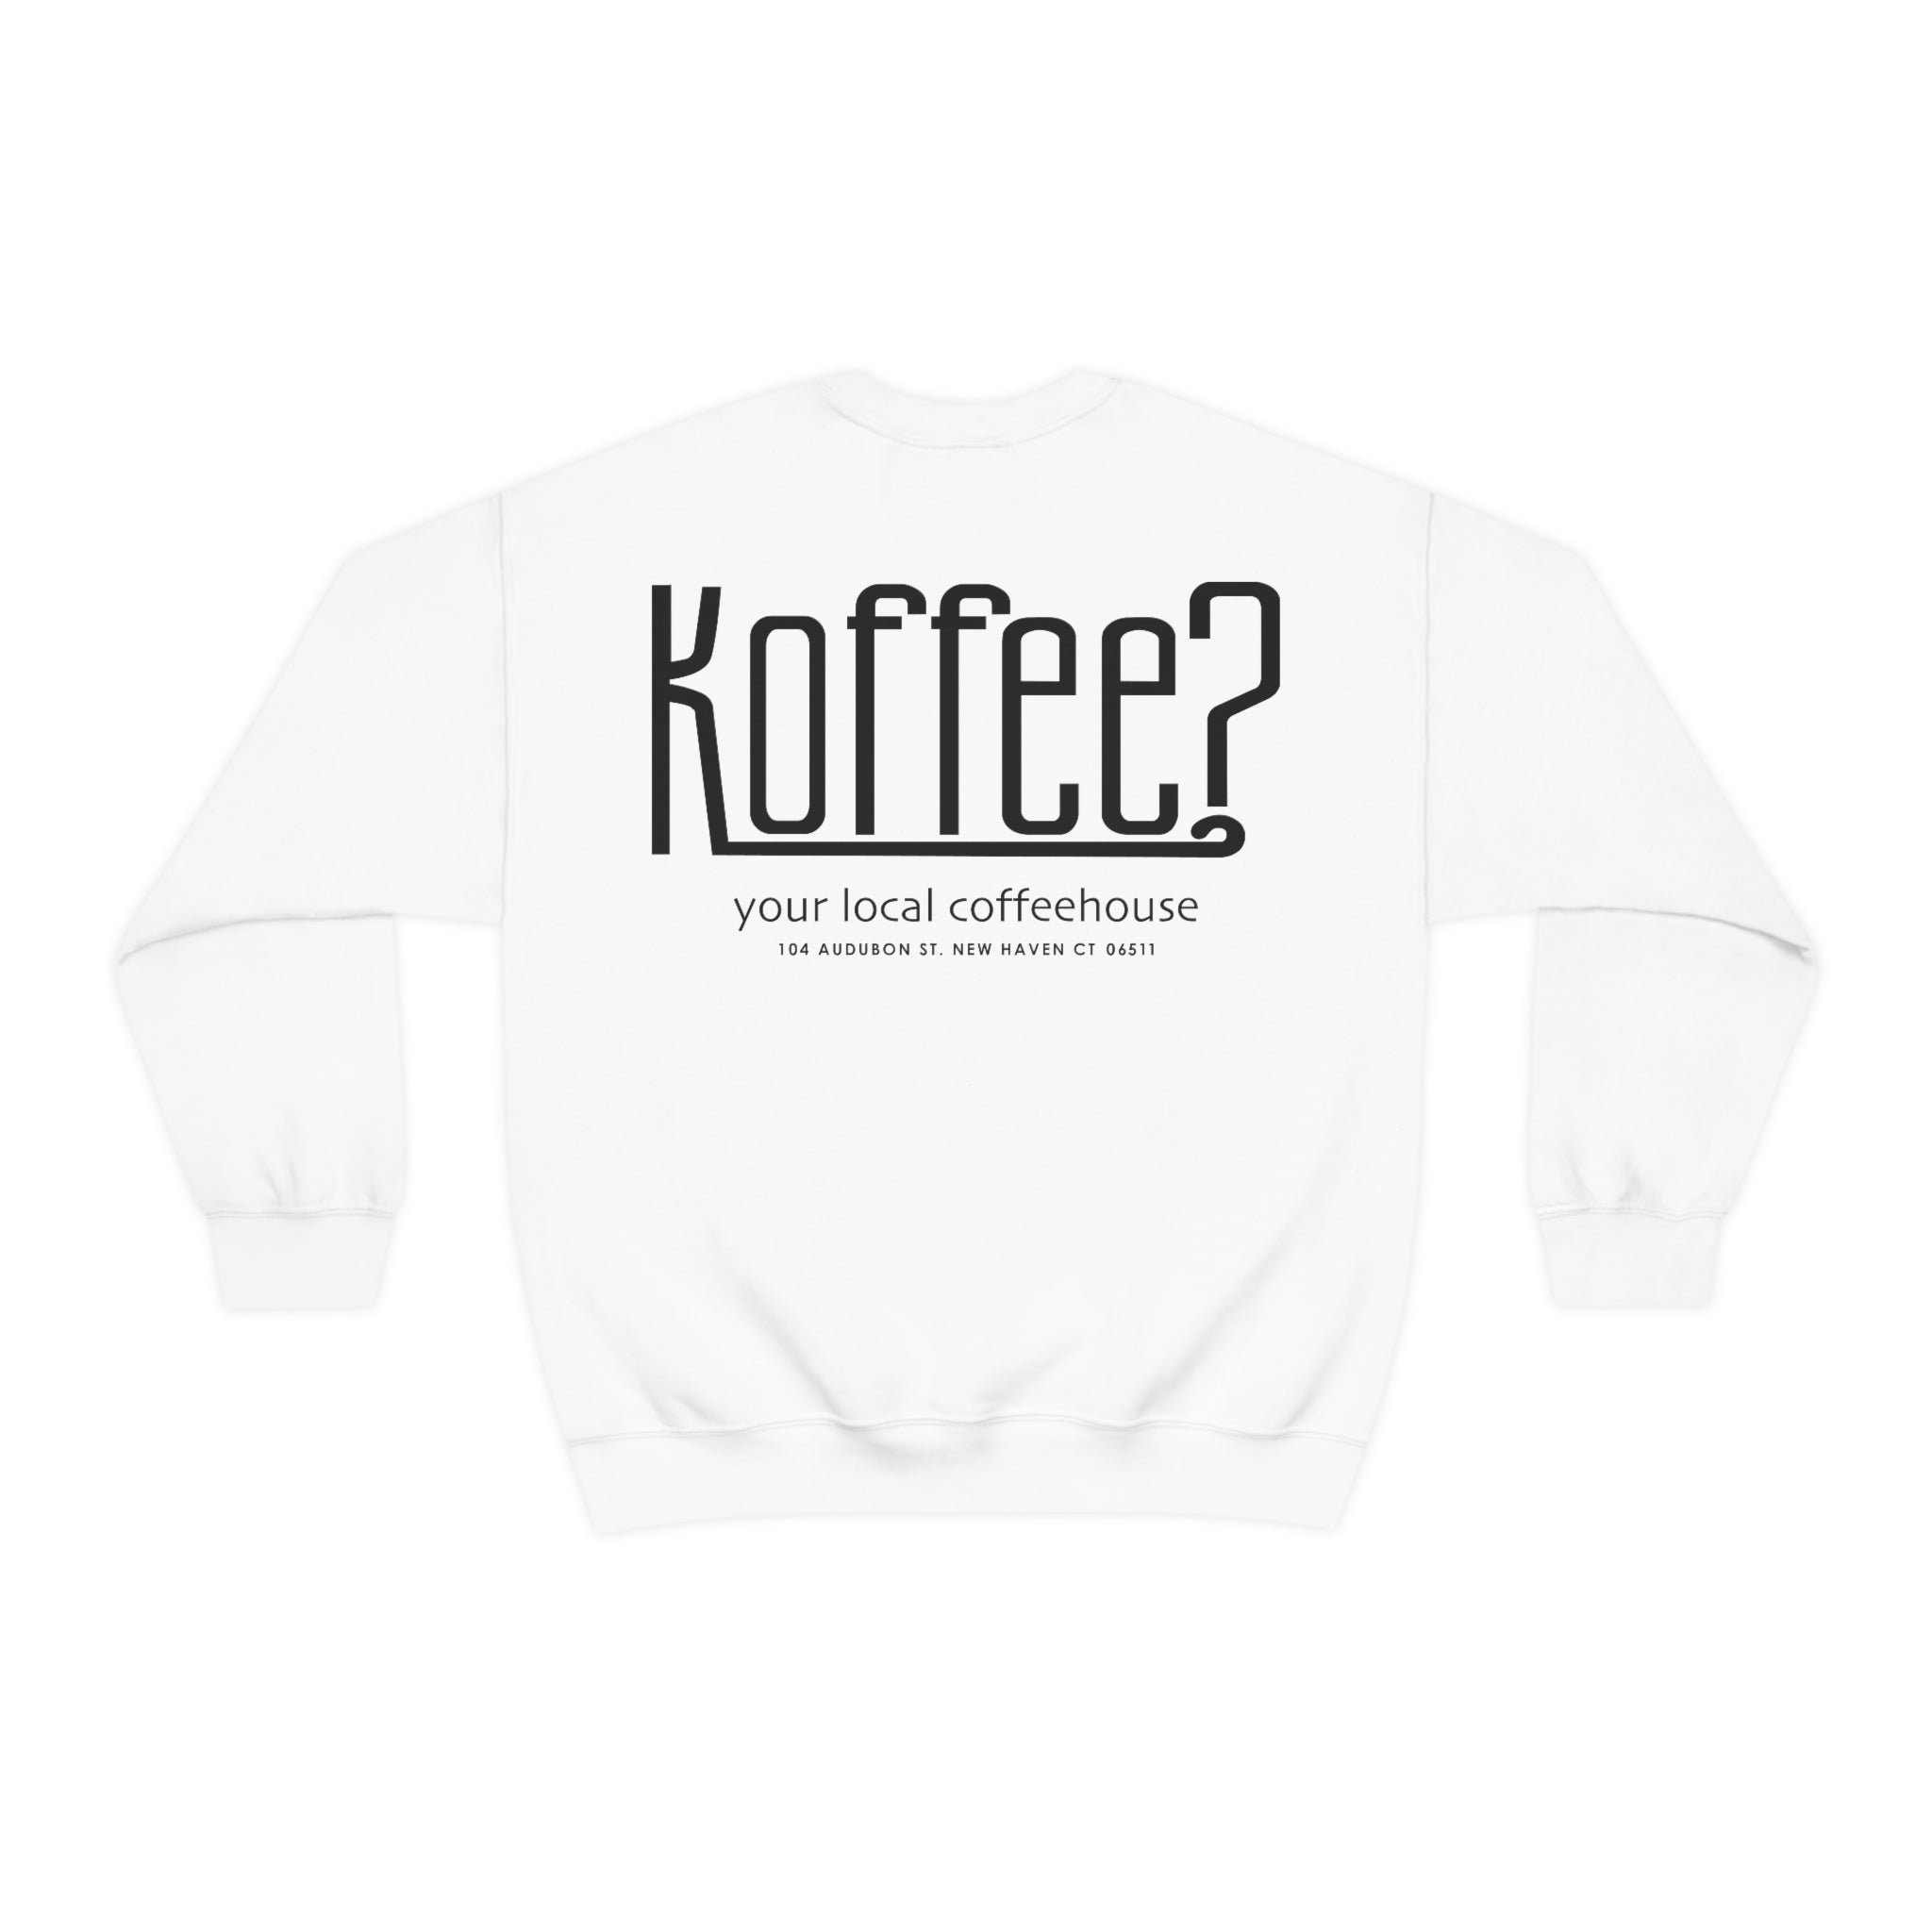 Koffee? Standard Sweatshirt in White